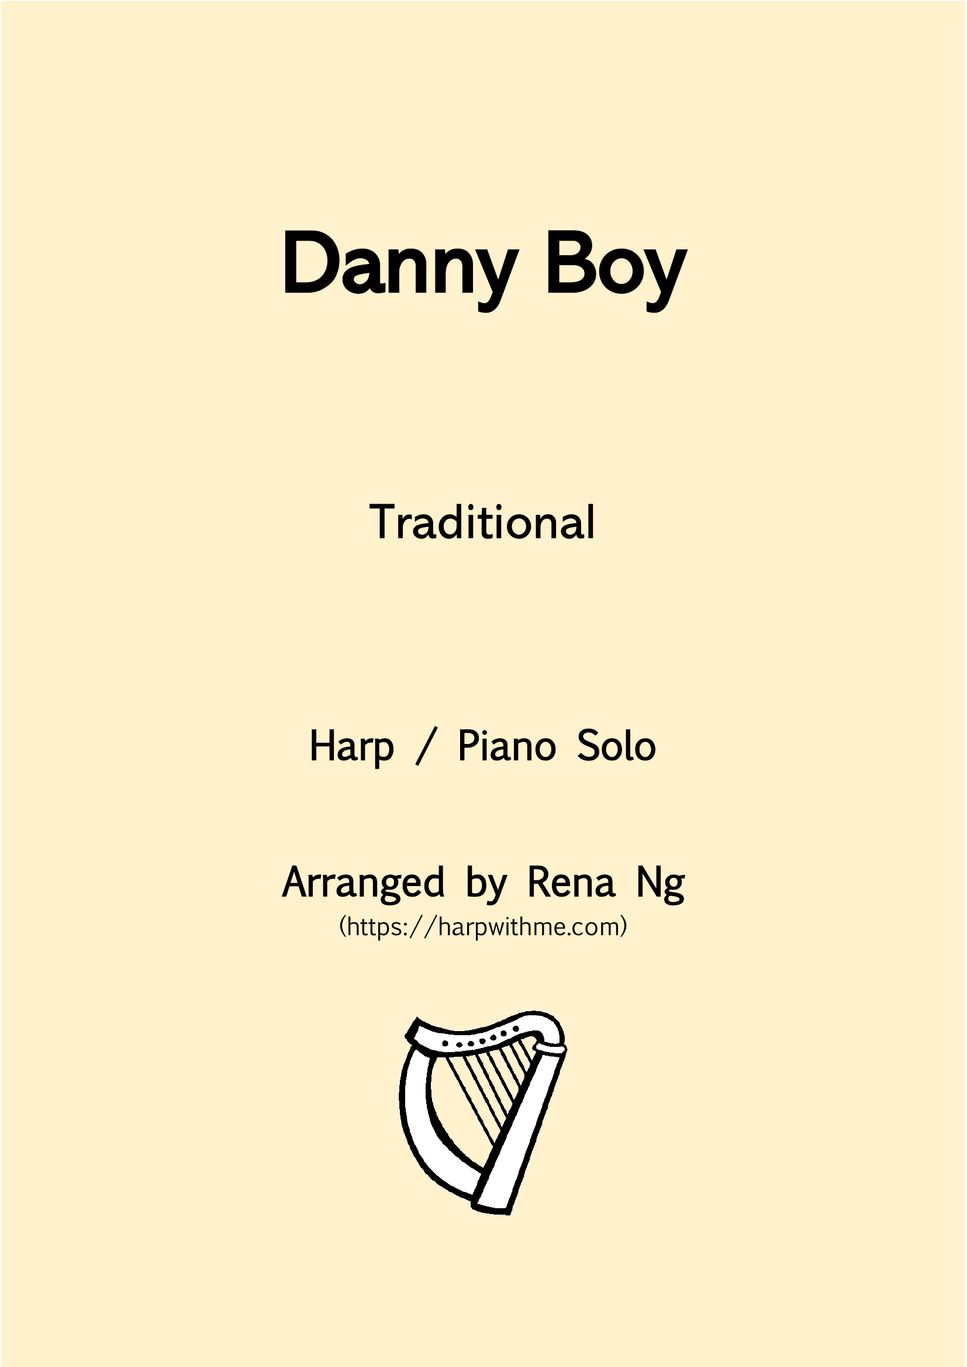 Danny Boy (Harp / Piano Solo) - Intermediate by Harp With Me